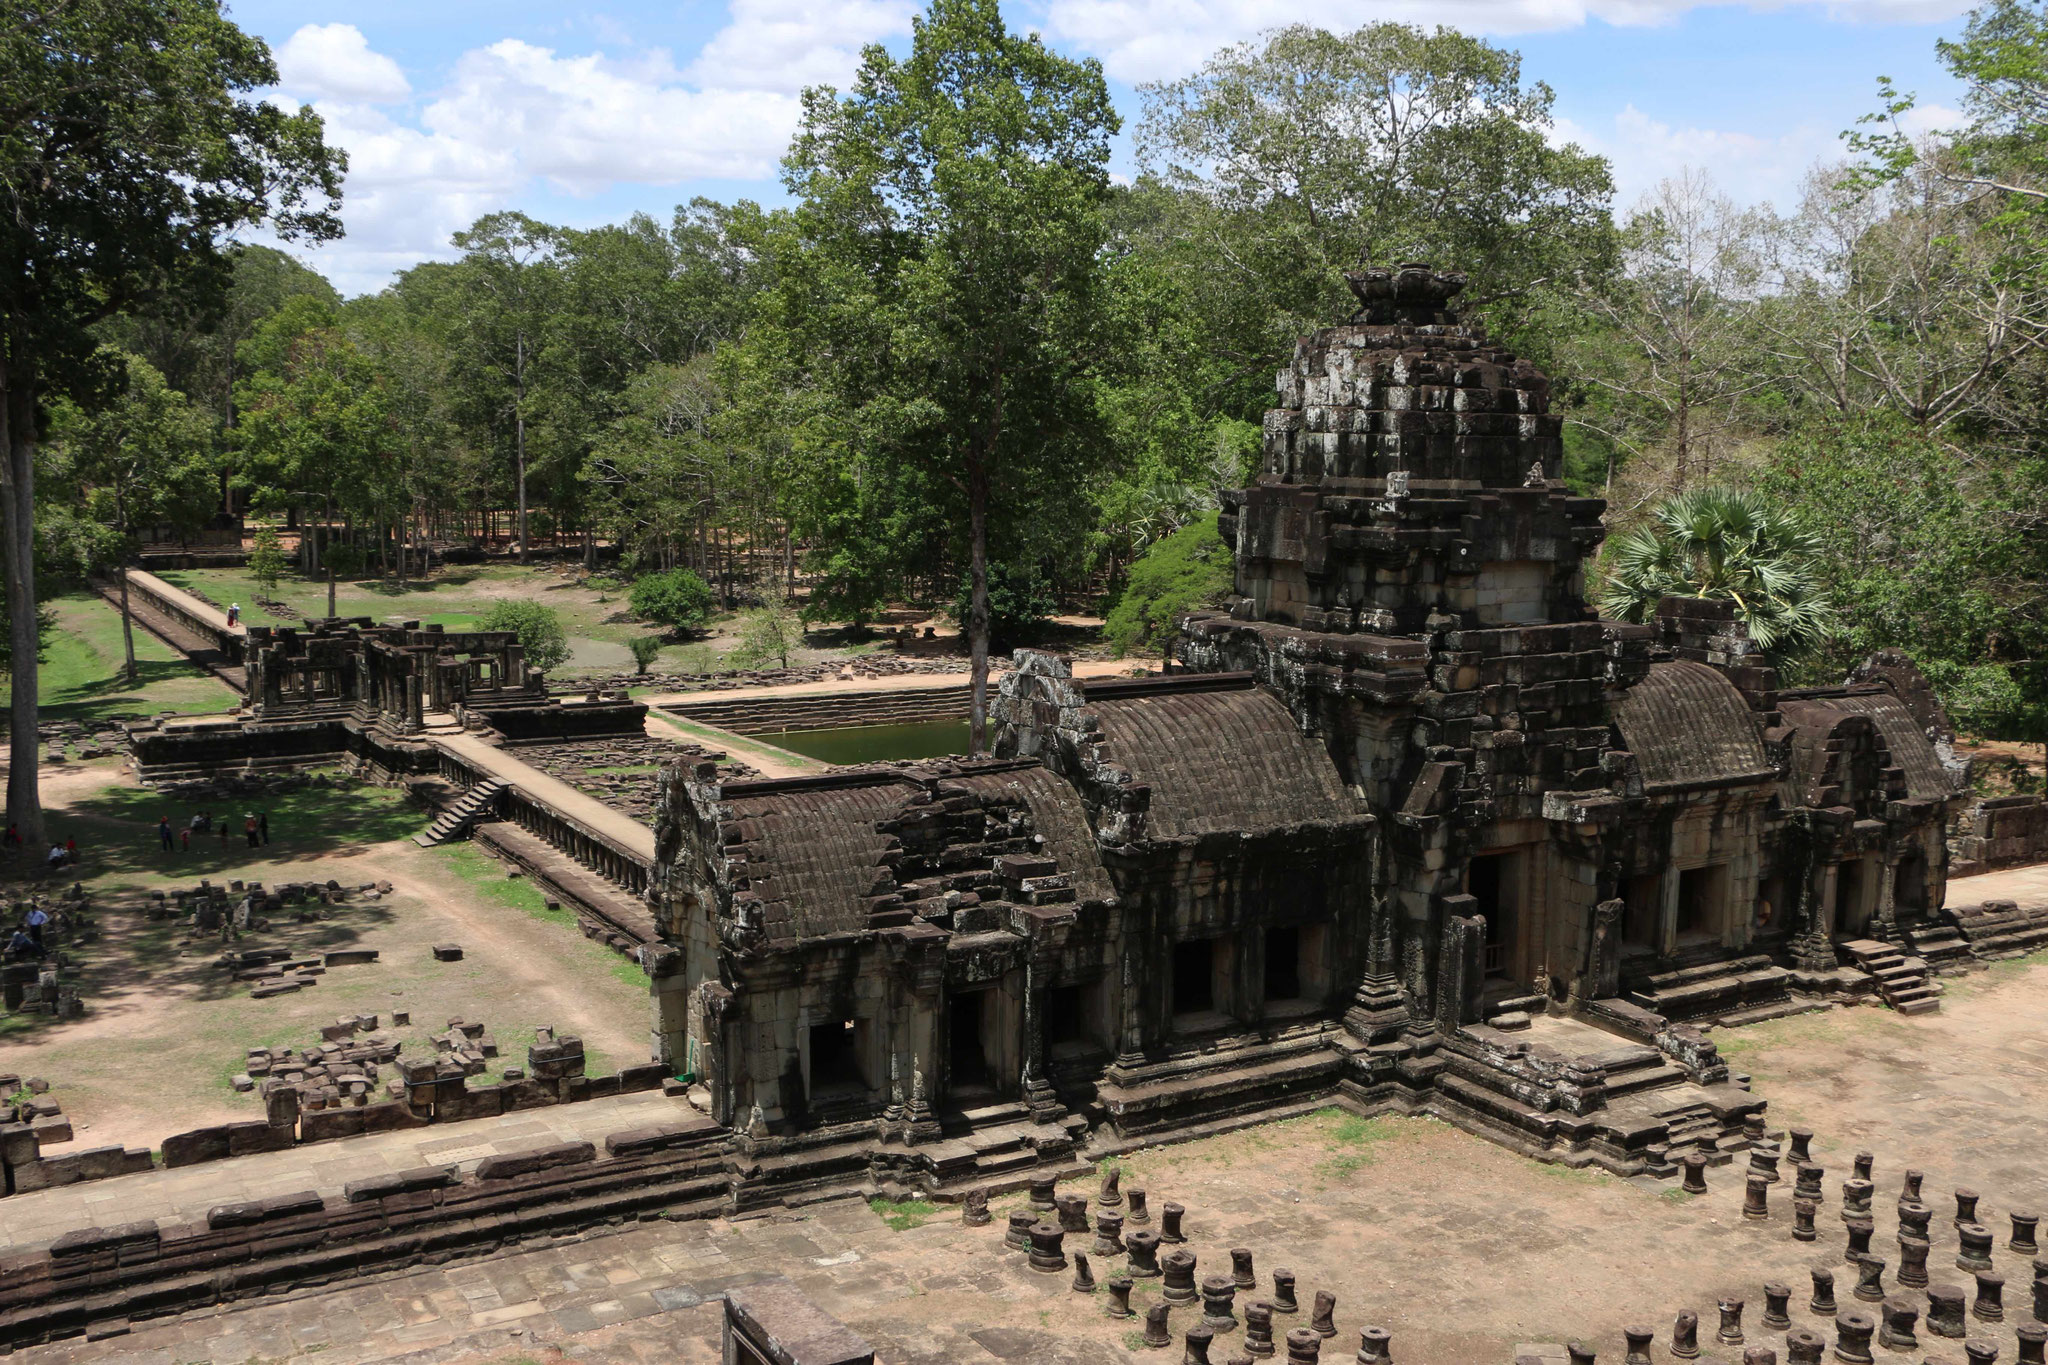 Angkor Thom - Baphuon